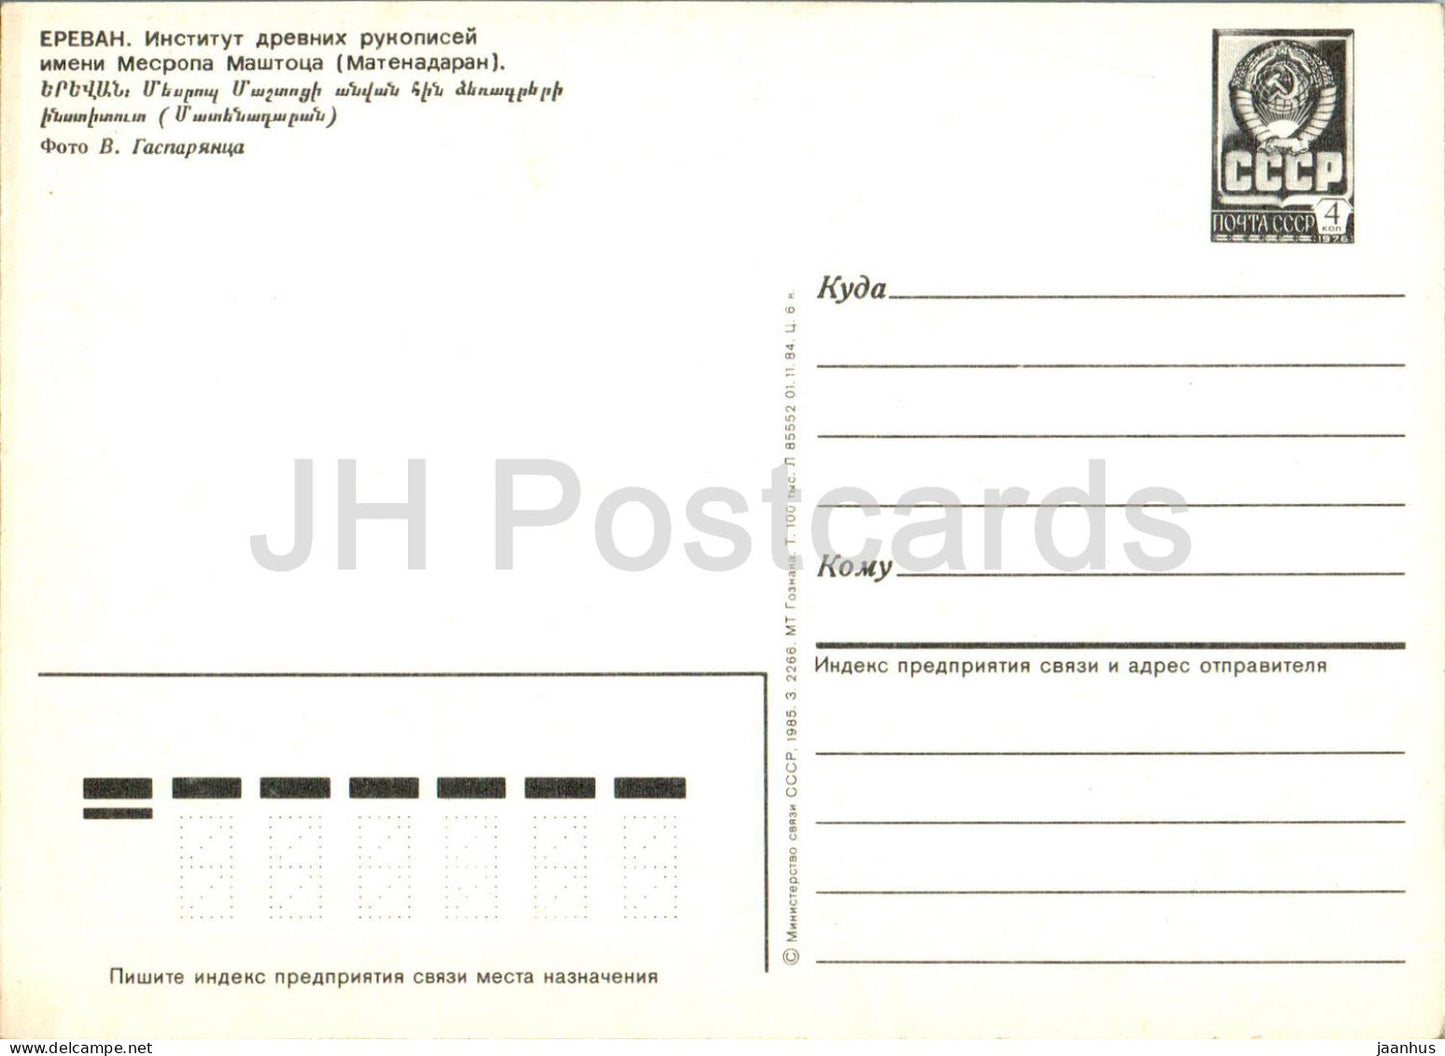 Erevan - Matenadaran - l'Institut des Manuscrits Anciens - entier postal - 1985 - Arménie URSS - inutilisé 